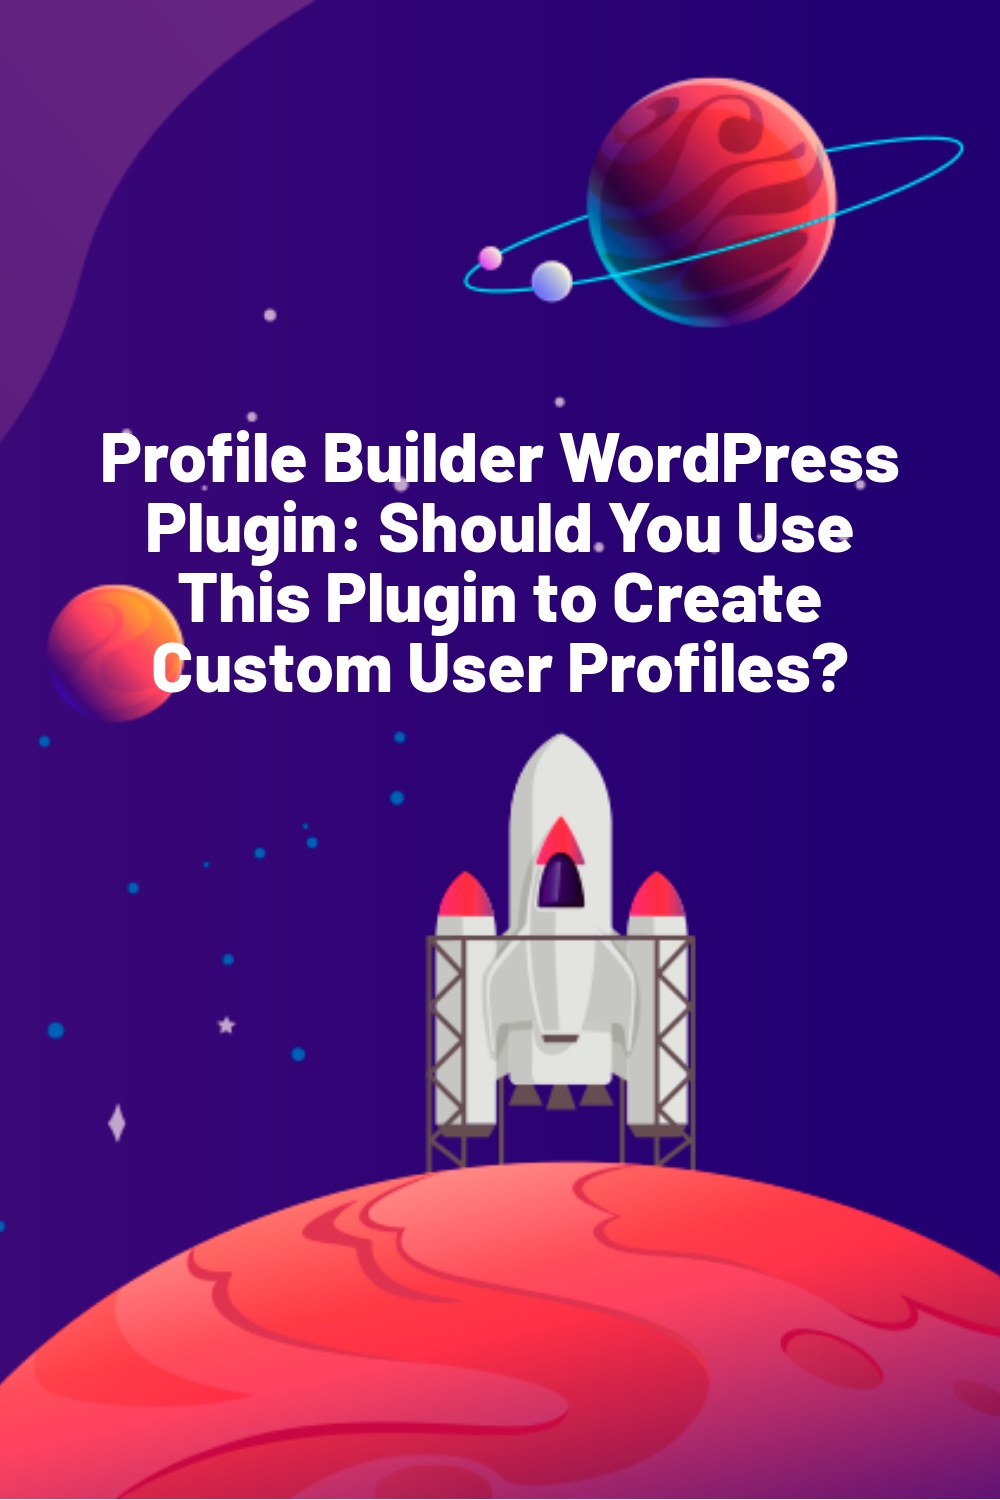 Profile Builder WordPress Plugin: Should You Use This Plugin to Create Custom User Profiles?